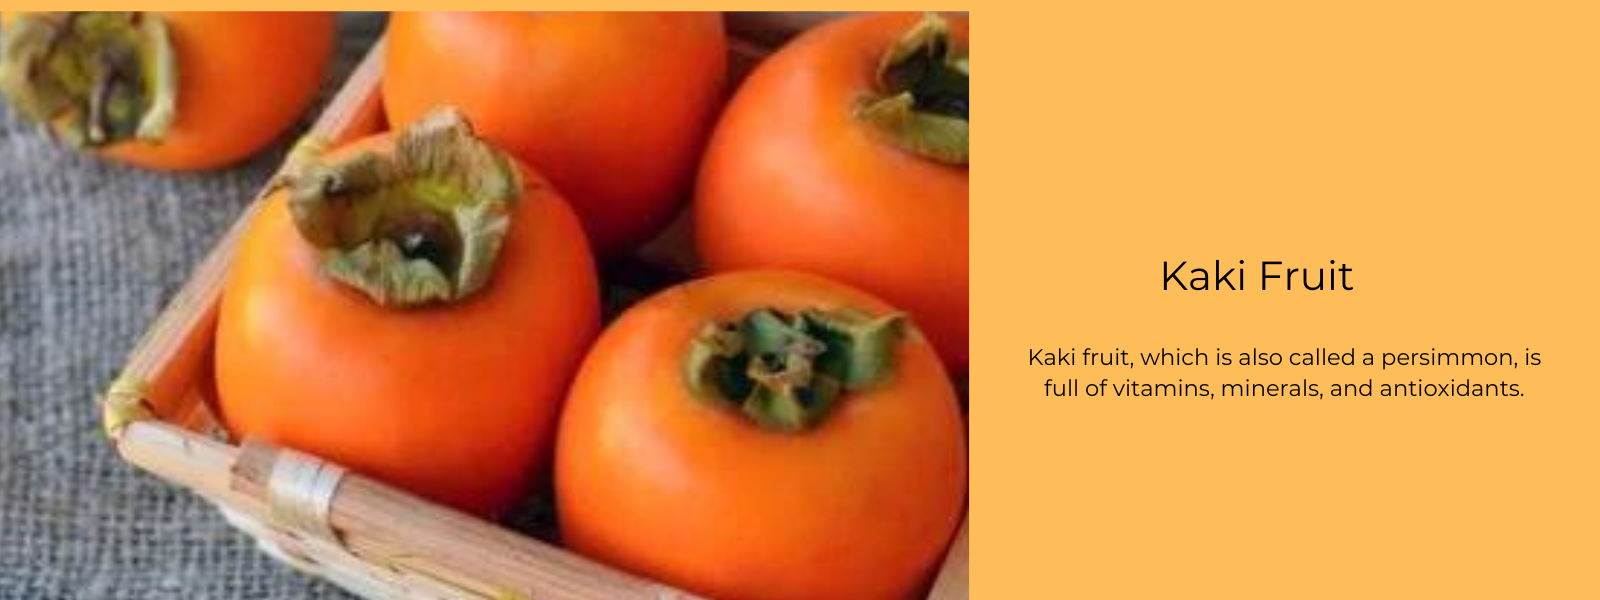 Kaki Fruit - Health Benefits, Uses and Important Facts - PotsandPans India